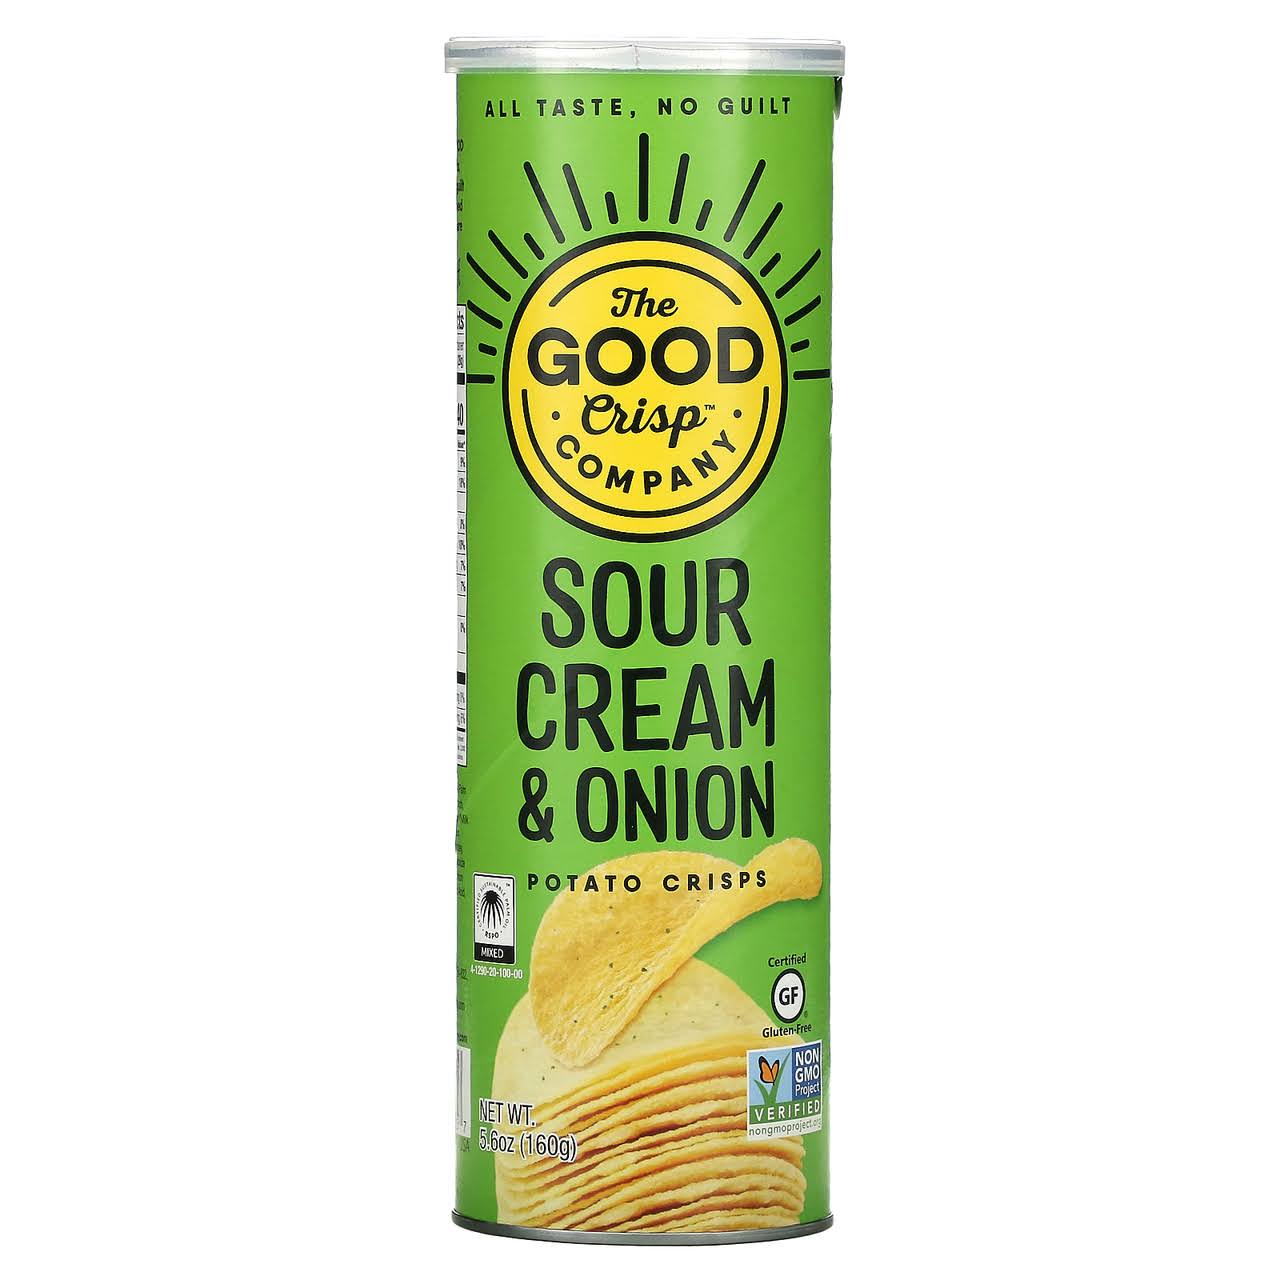 The Good Crisp Company Potato Crisps Sour Cream & Onion 5.6 oz (160 g)